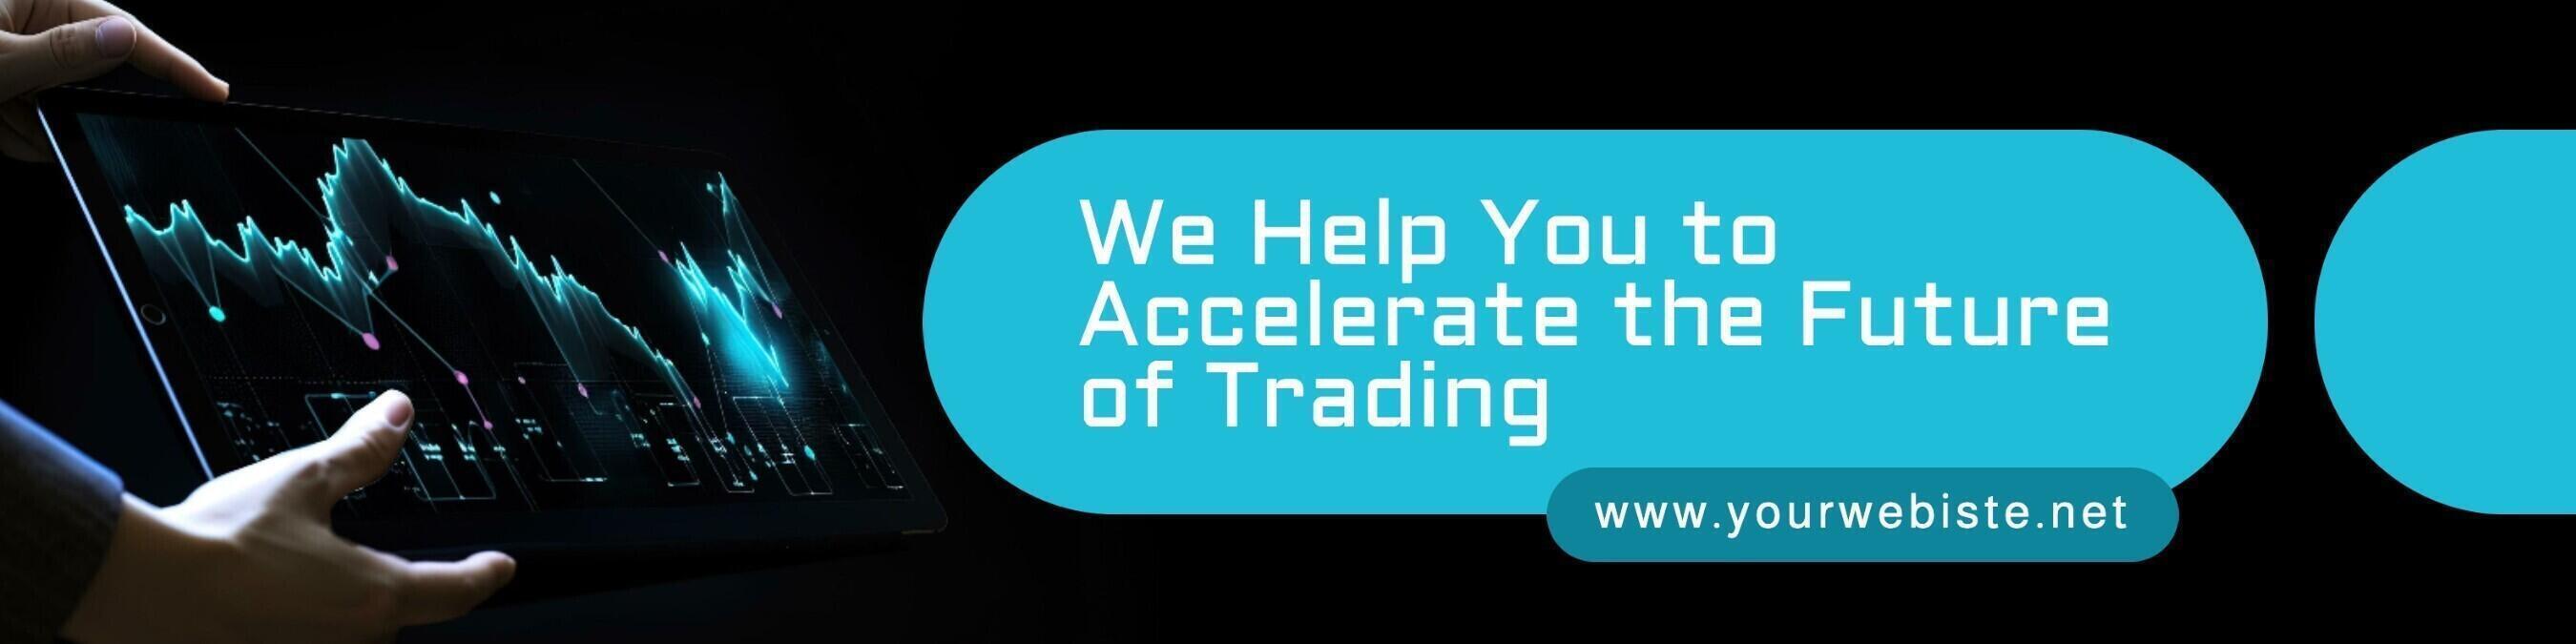 Trading Finance Linkedin Banner Template